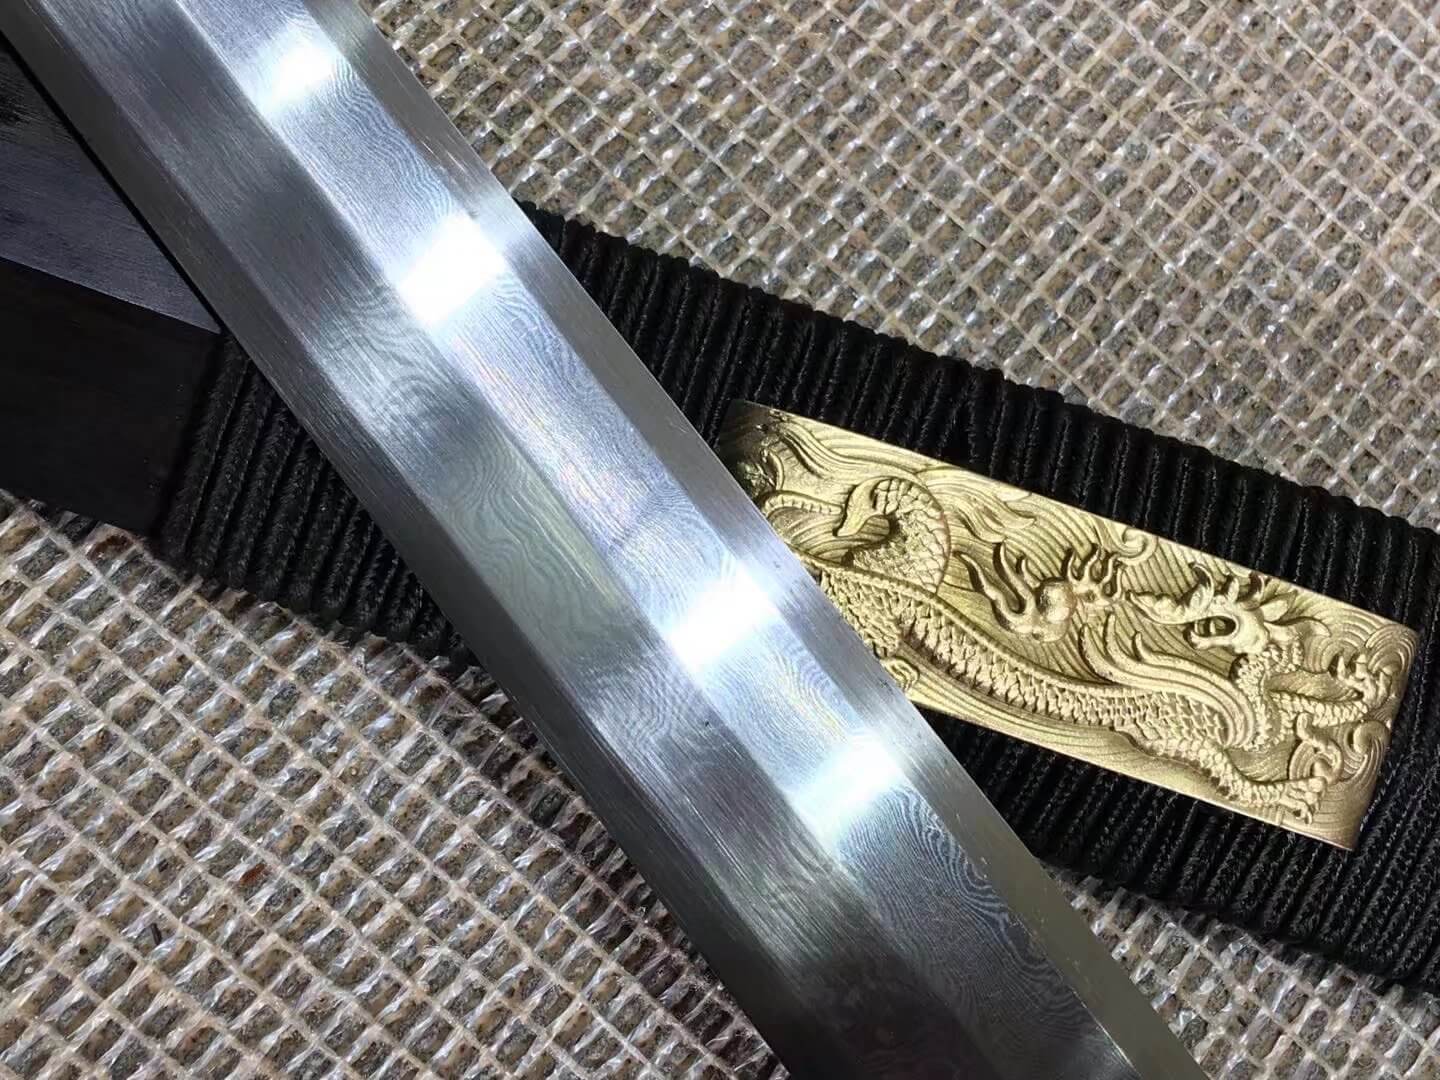 Han sword(Damascus steel bade,Black scabbard,Brass fittings)Length 41" - Chinese sword shop